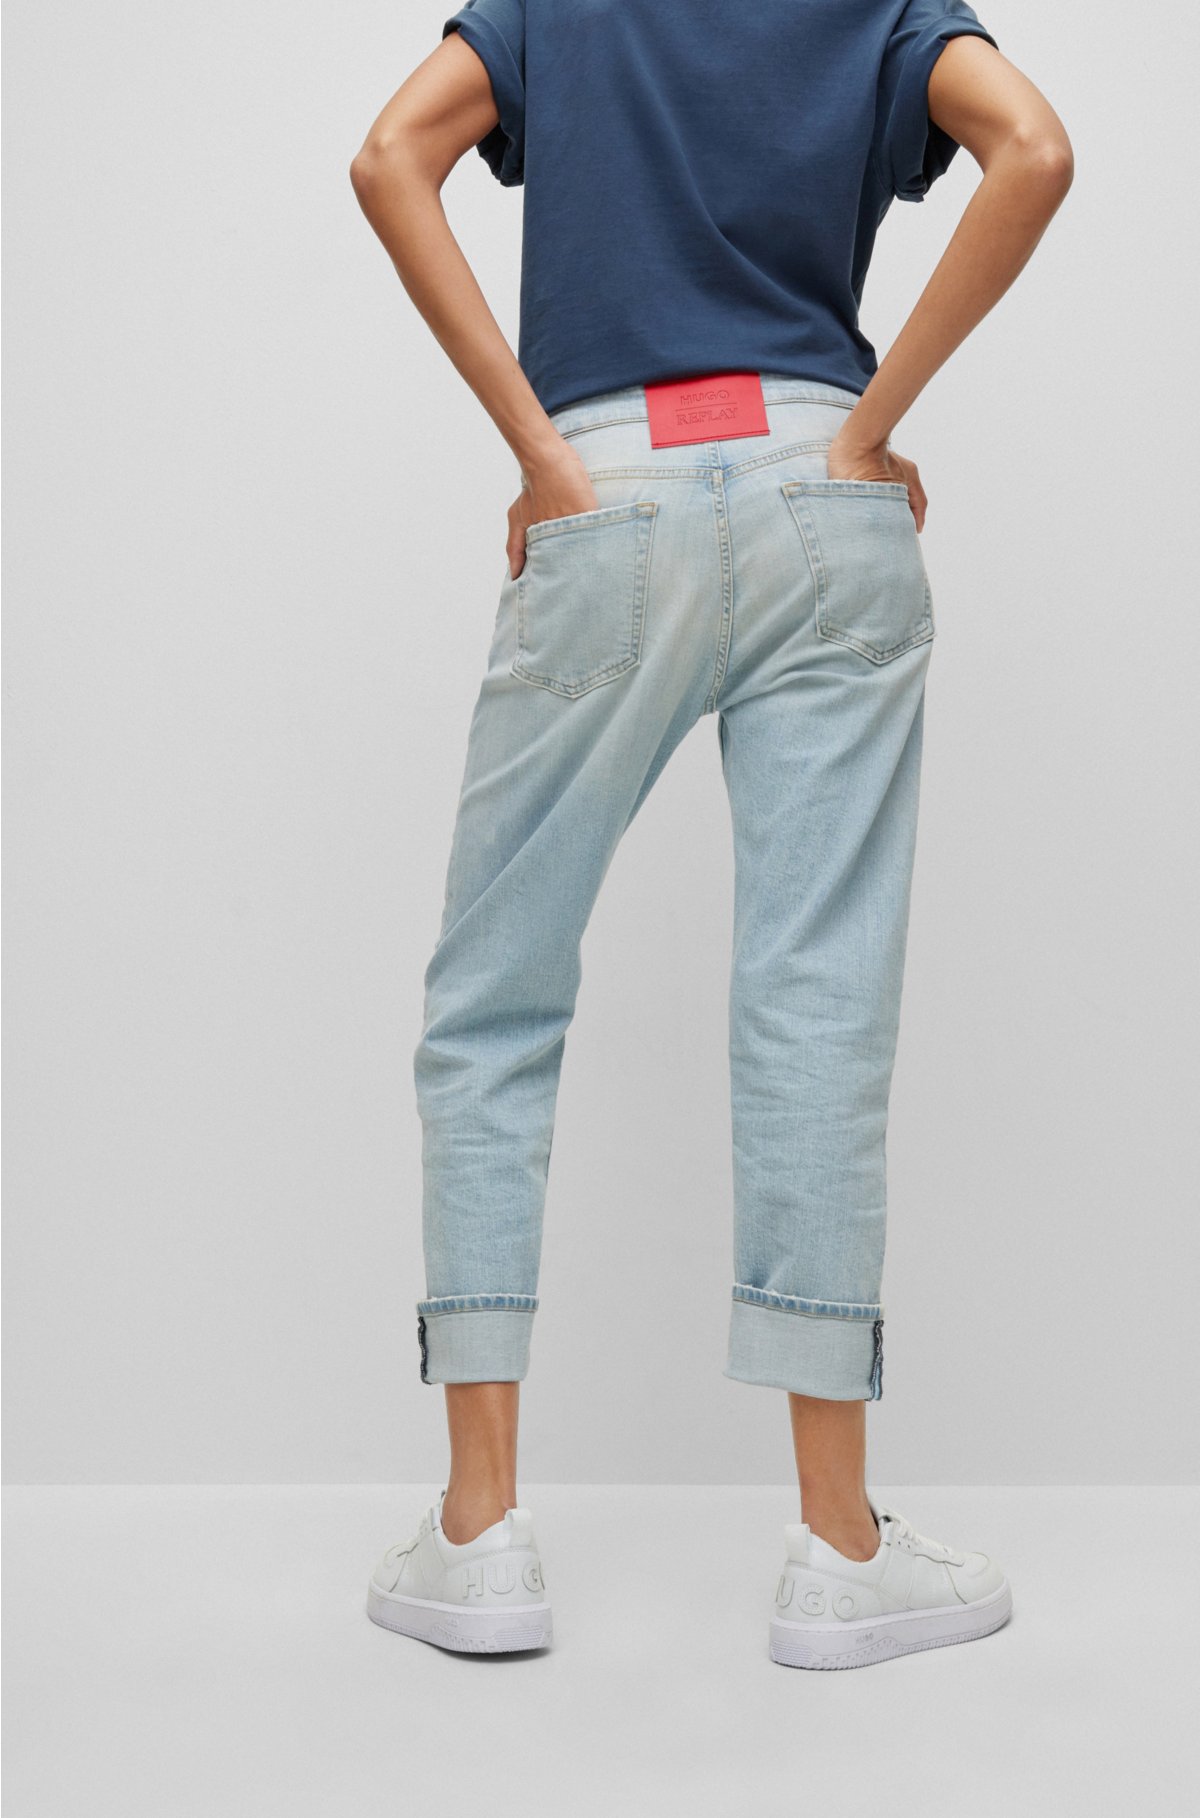 HUGO - HUGO | jeans regular-fit light-blue in REPLAY stretch denim